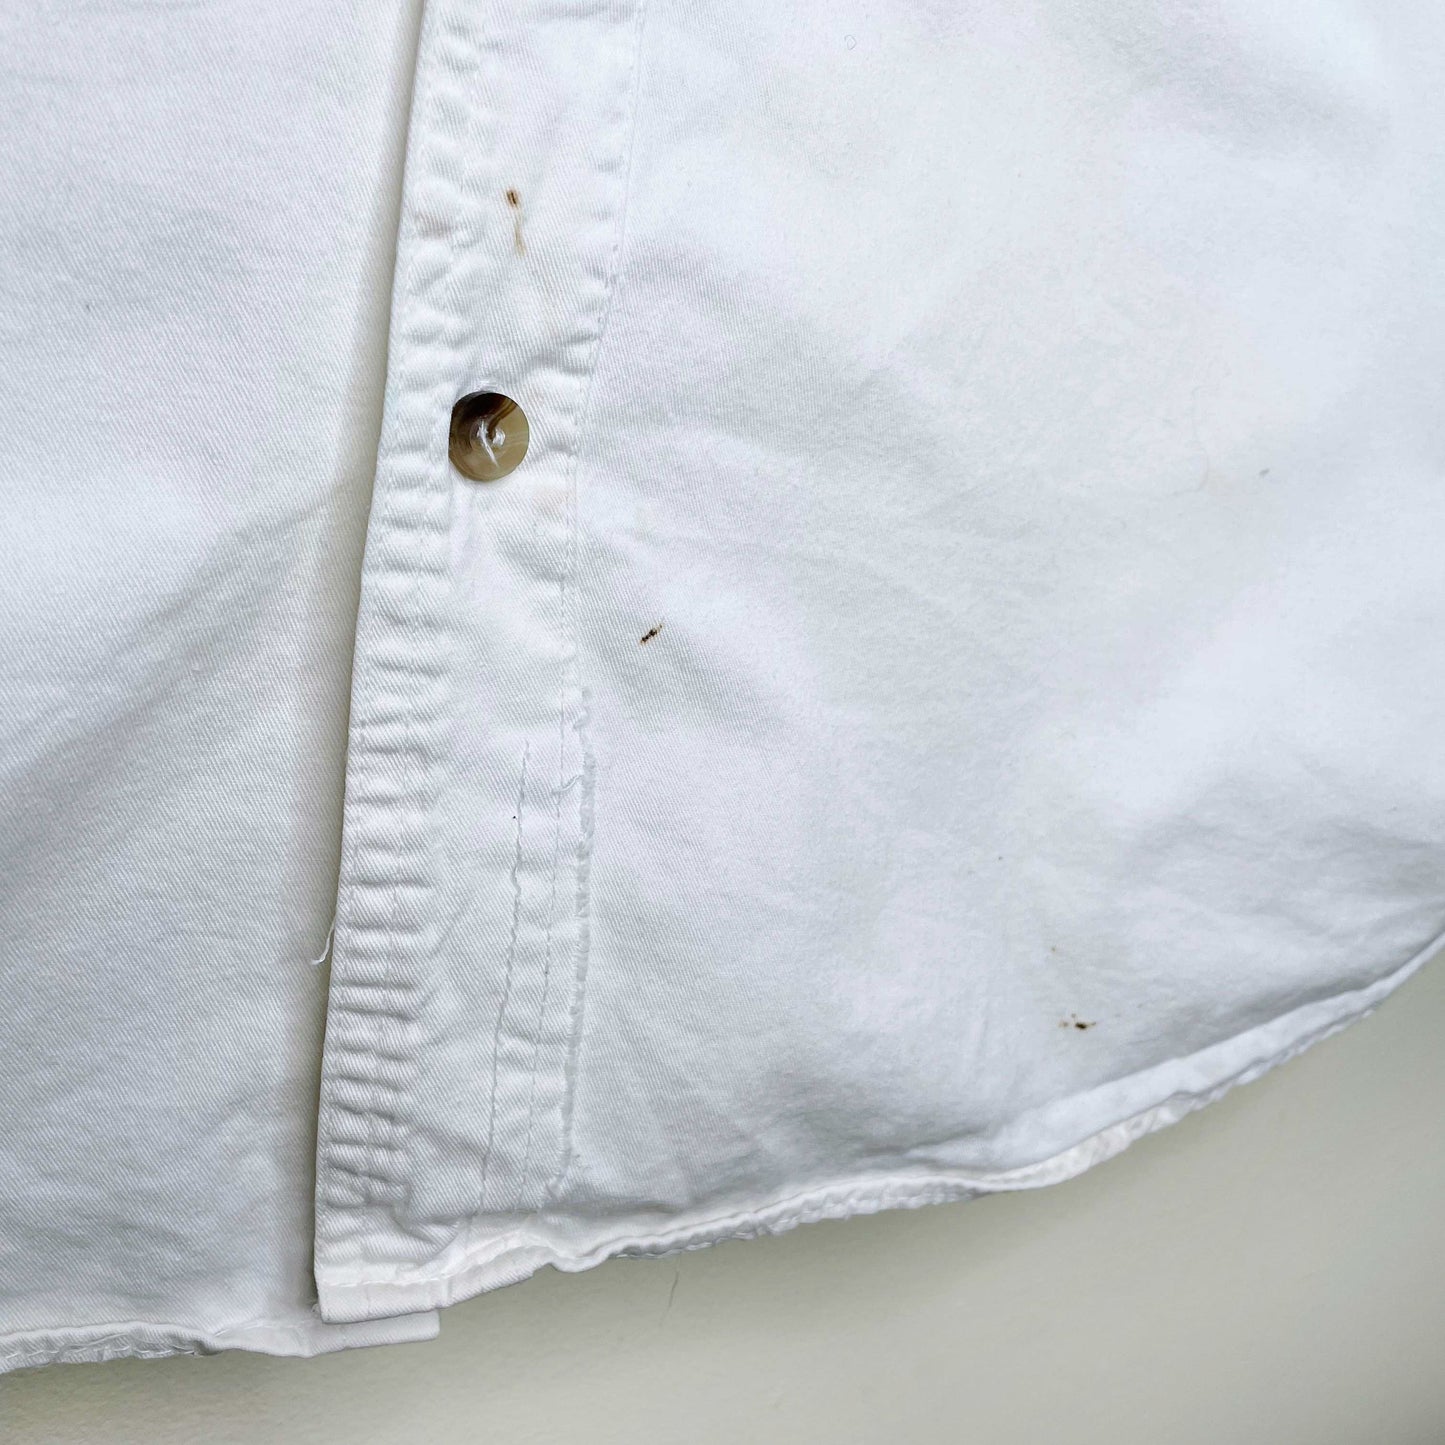 vintage arizona bike week 2012 cut off button down shirt - size large